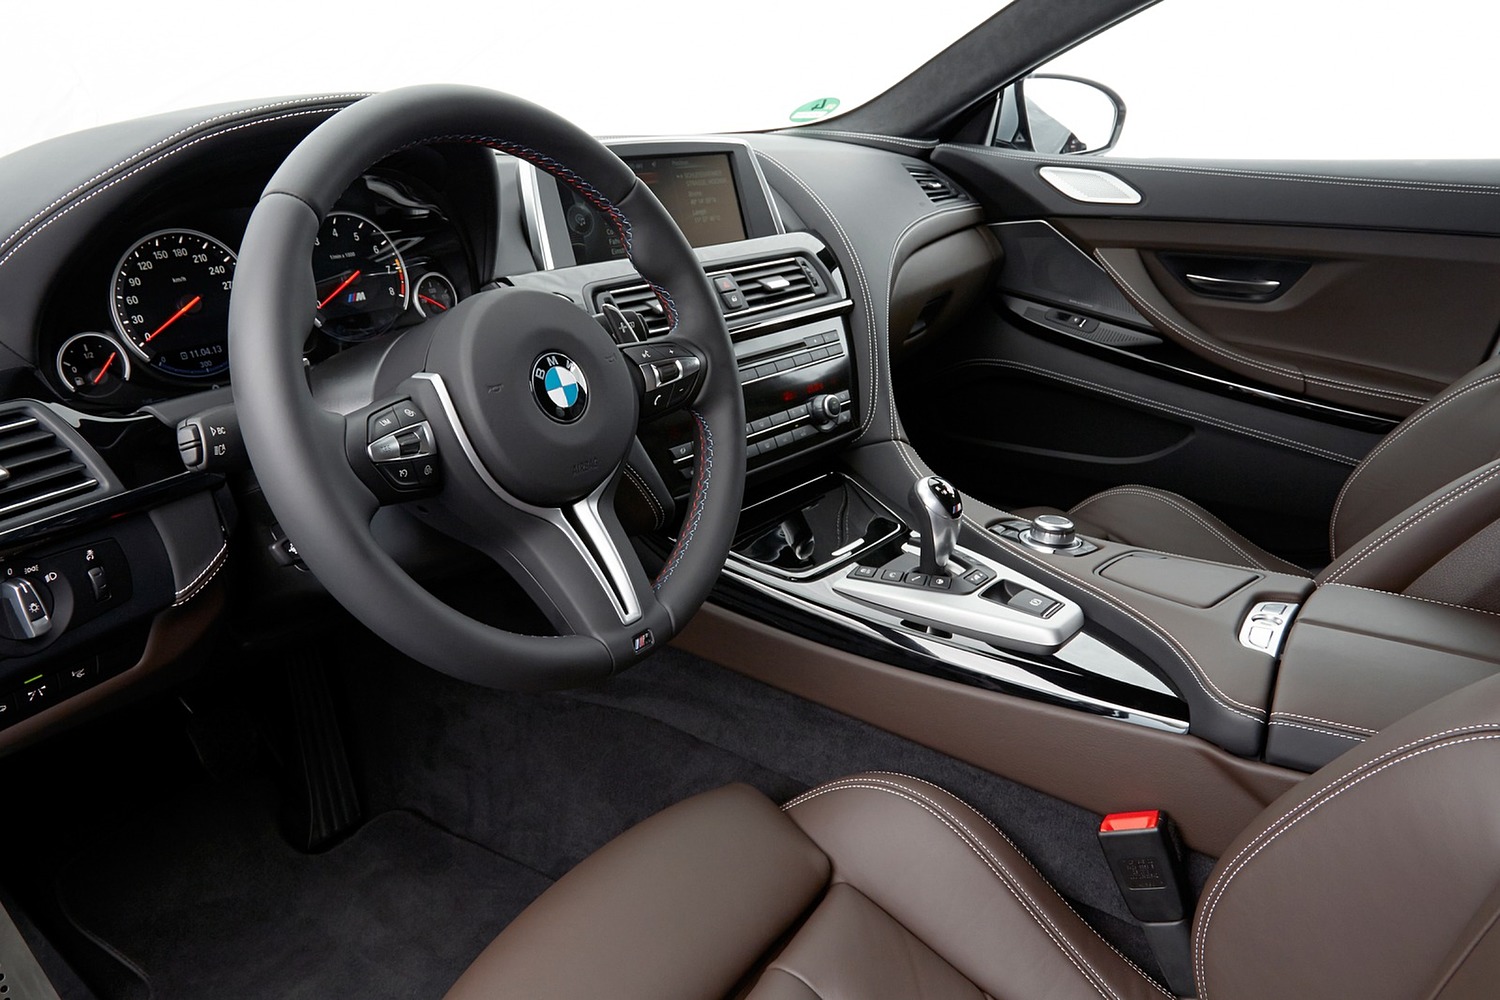 BMW M6 Gran Coupe Sedan Interior (2017 model year shown)